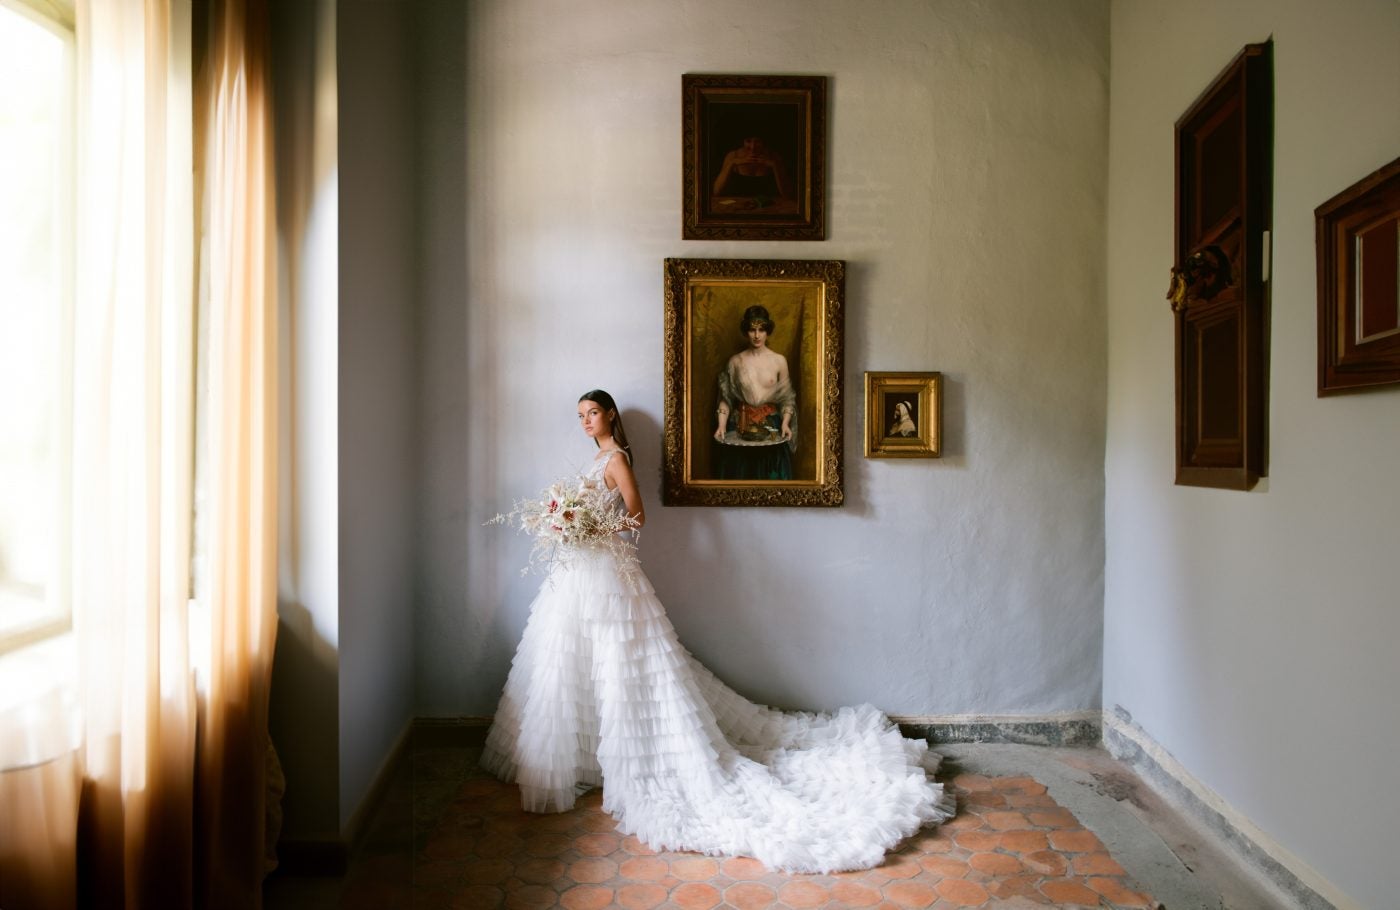 Romantic Wedding Dresses - Largest Selection - Kleinfeld